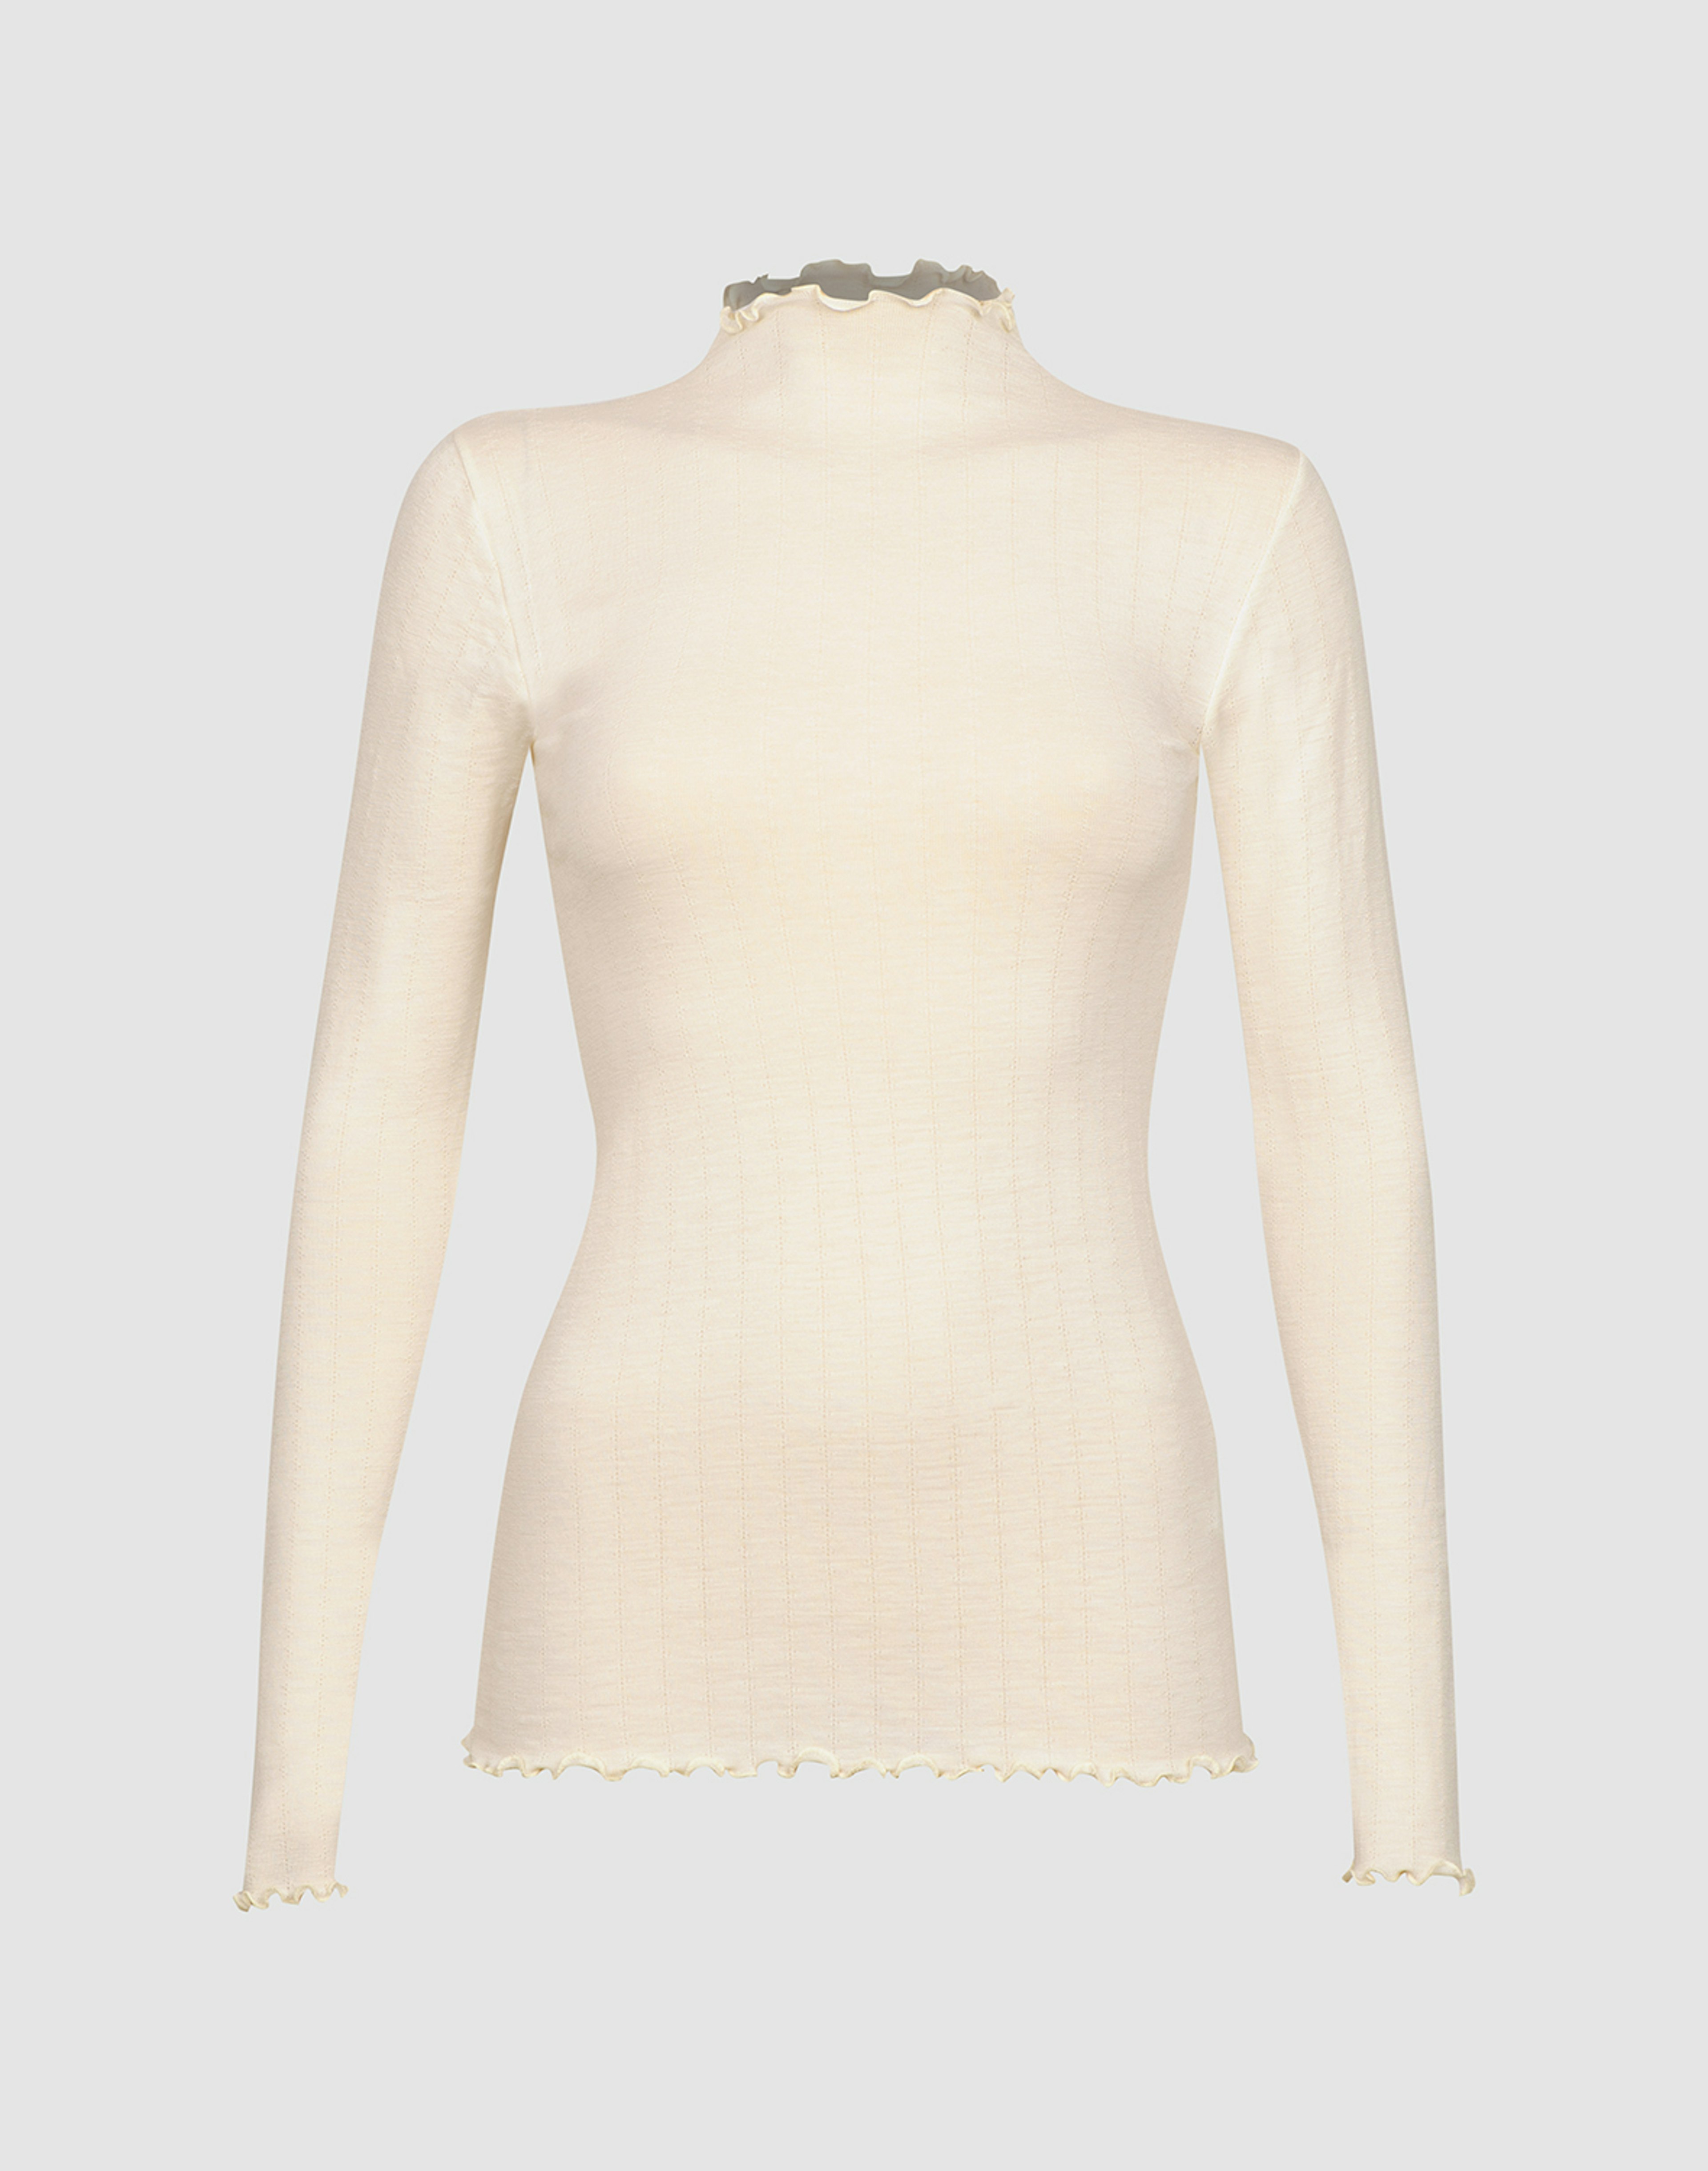 Women's merino wool/silk pointelle high neck top